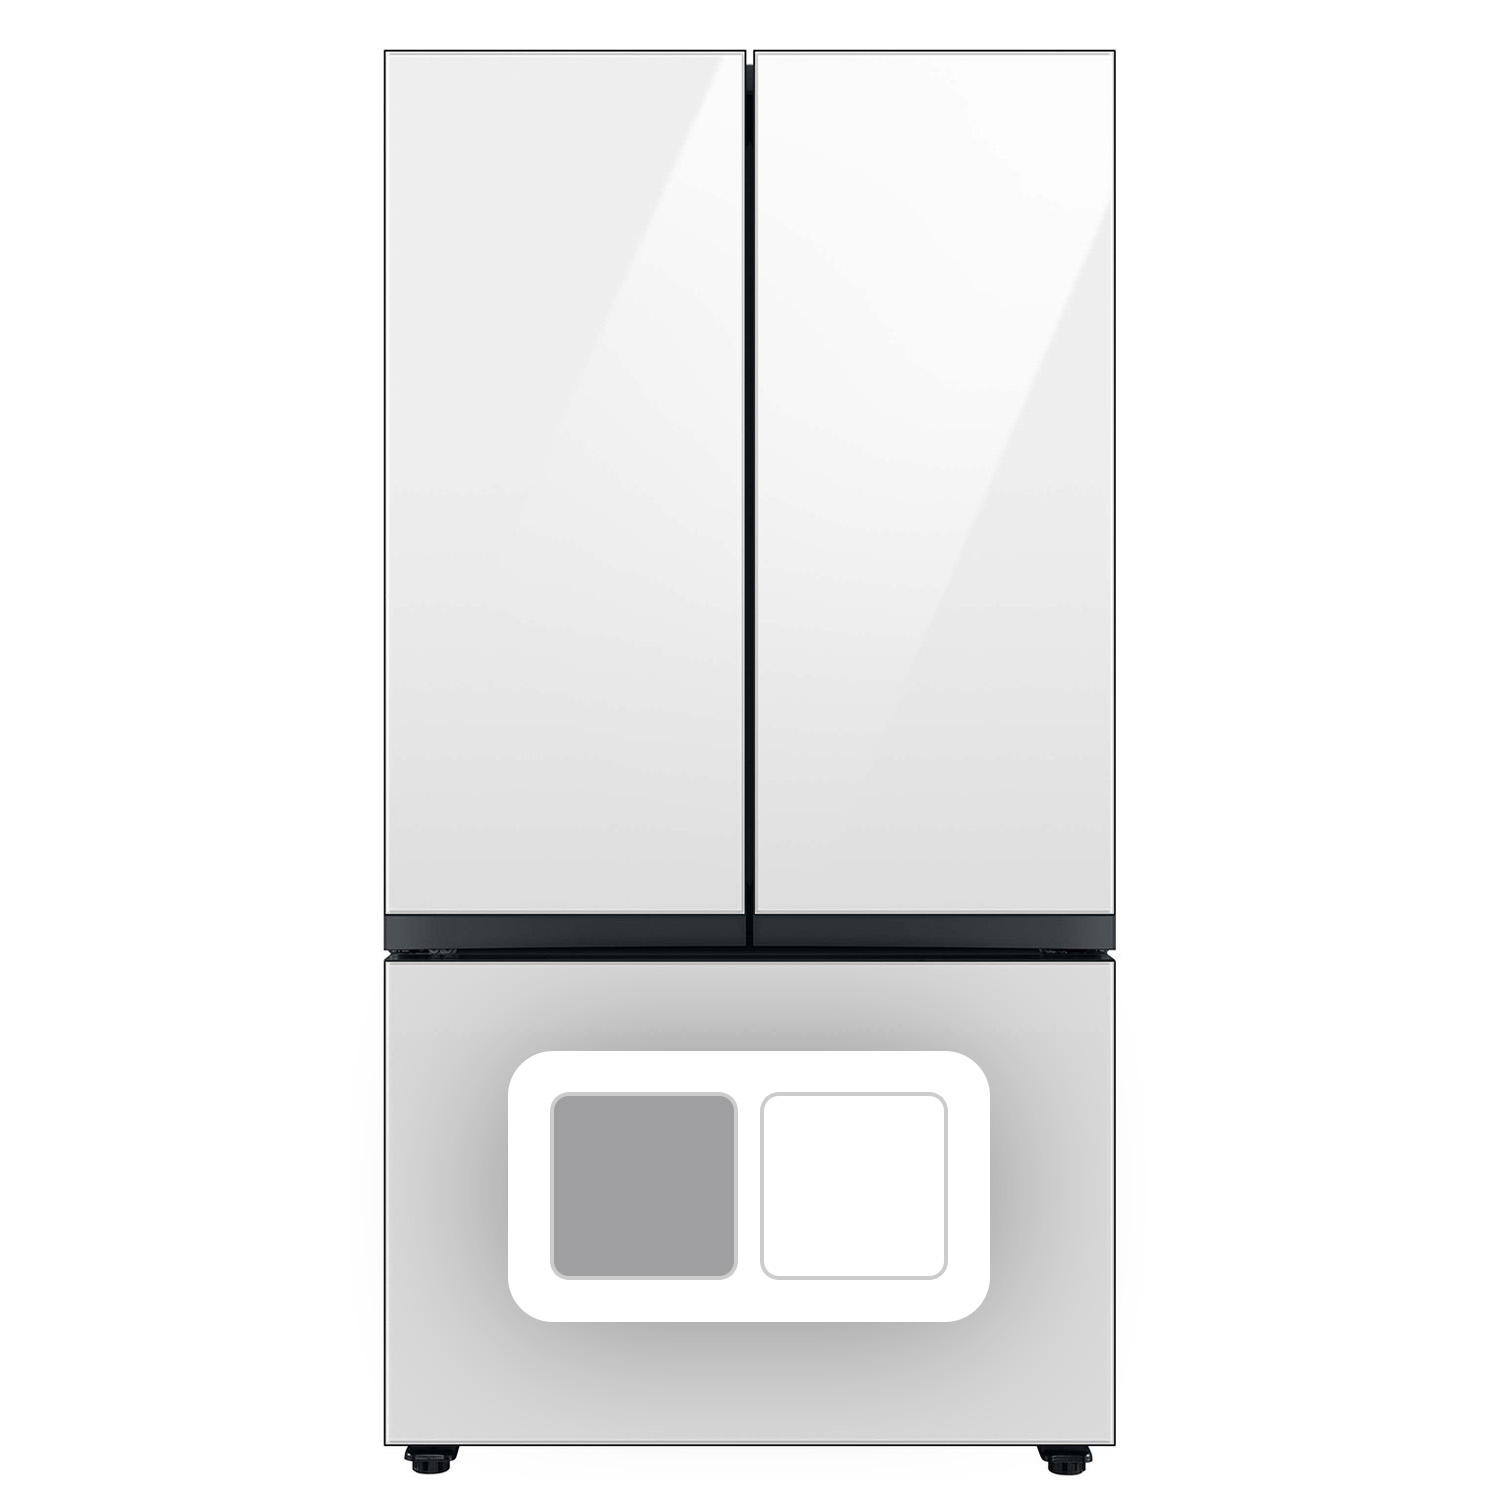 Samsung Bespoke 30 Cu. Ft. Smart French-Door Refrigerator w/ AutoFill Water Pitcher (White)